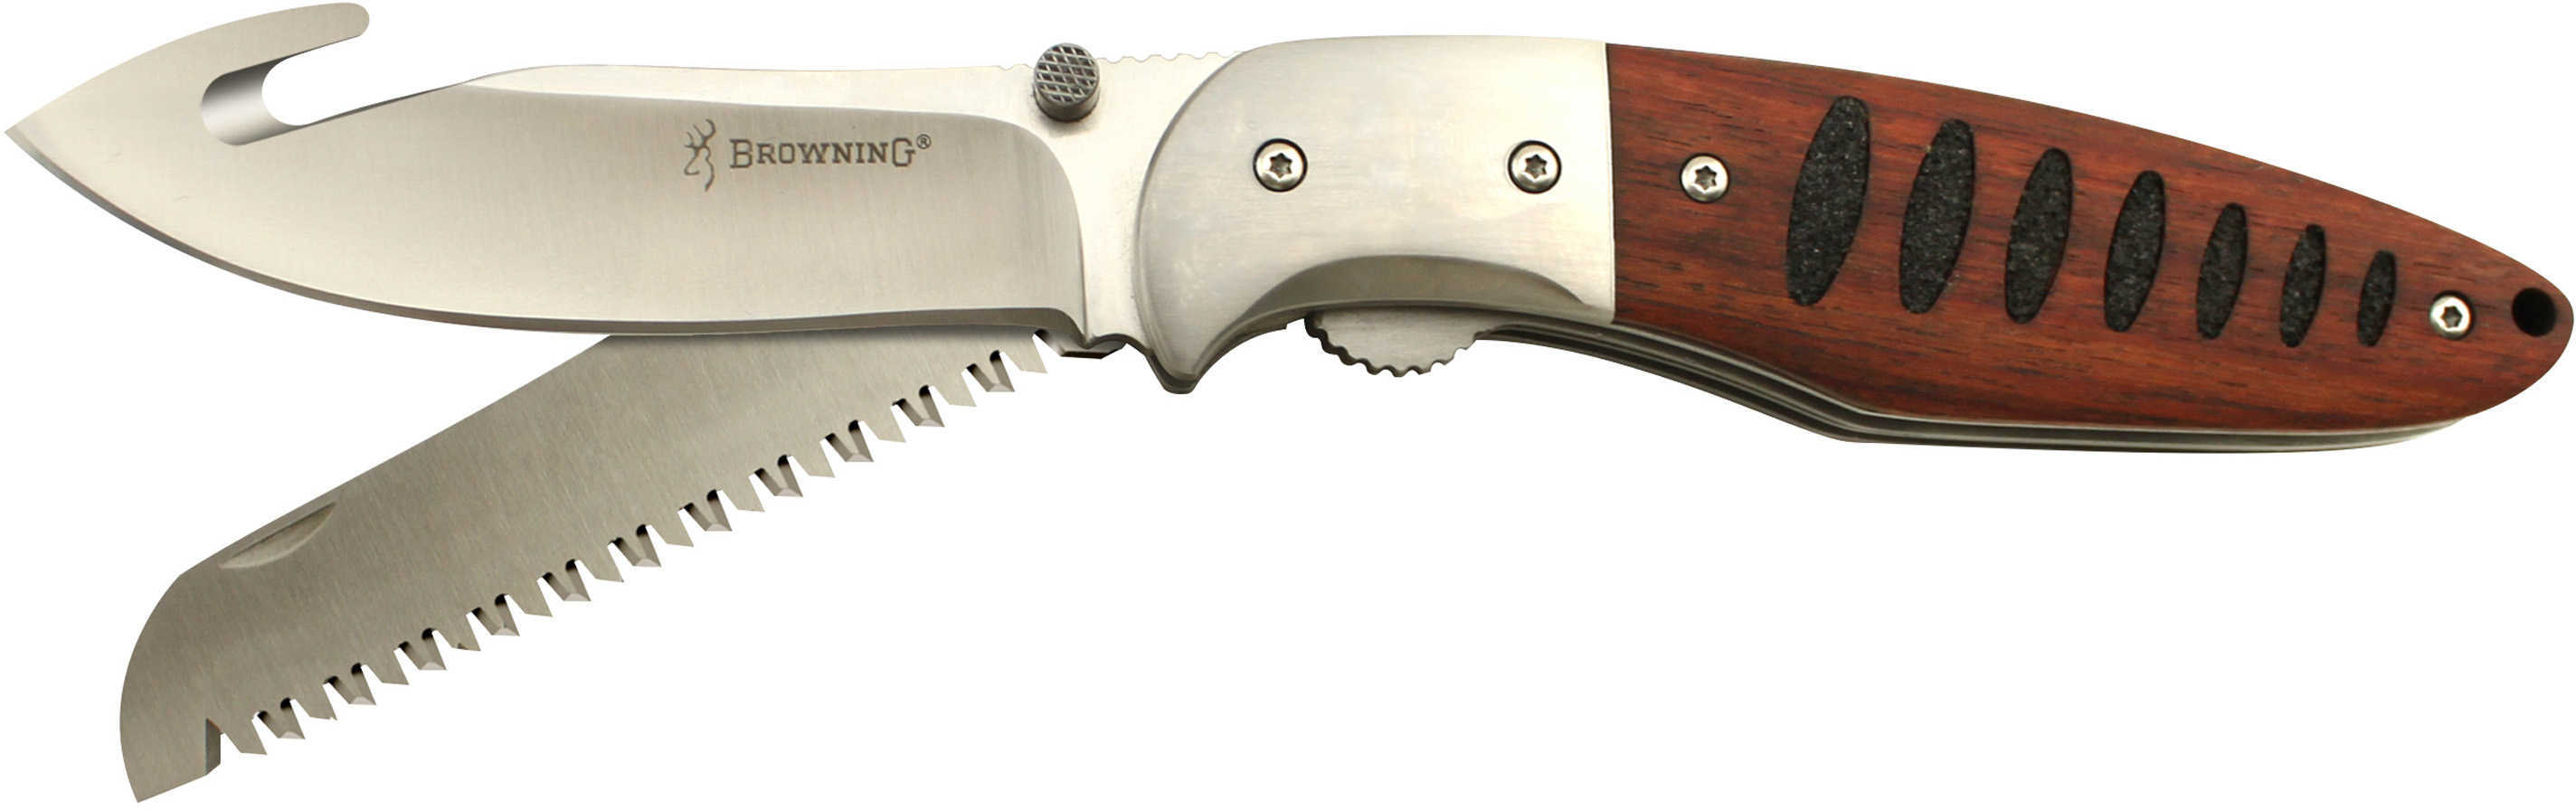 Browning Hunt 'n Gut Knives Wood Md: 3220053